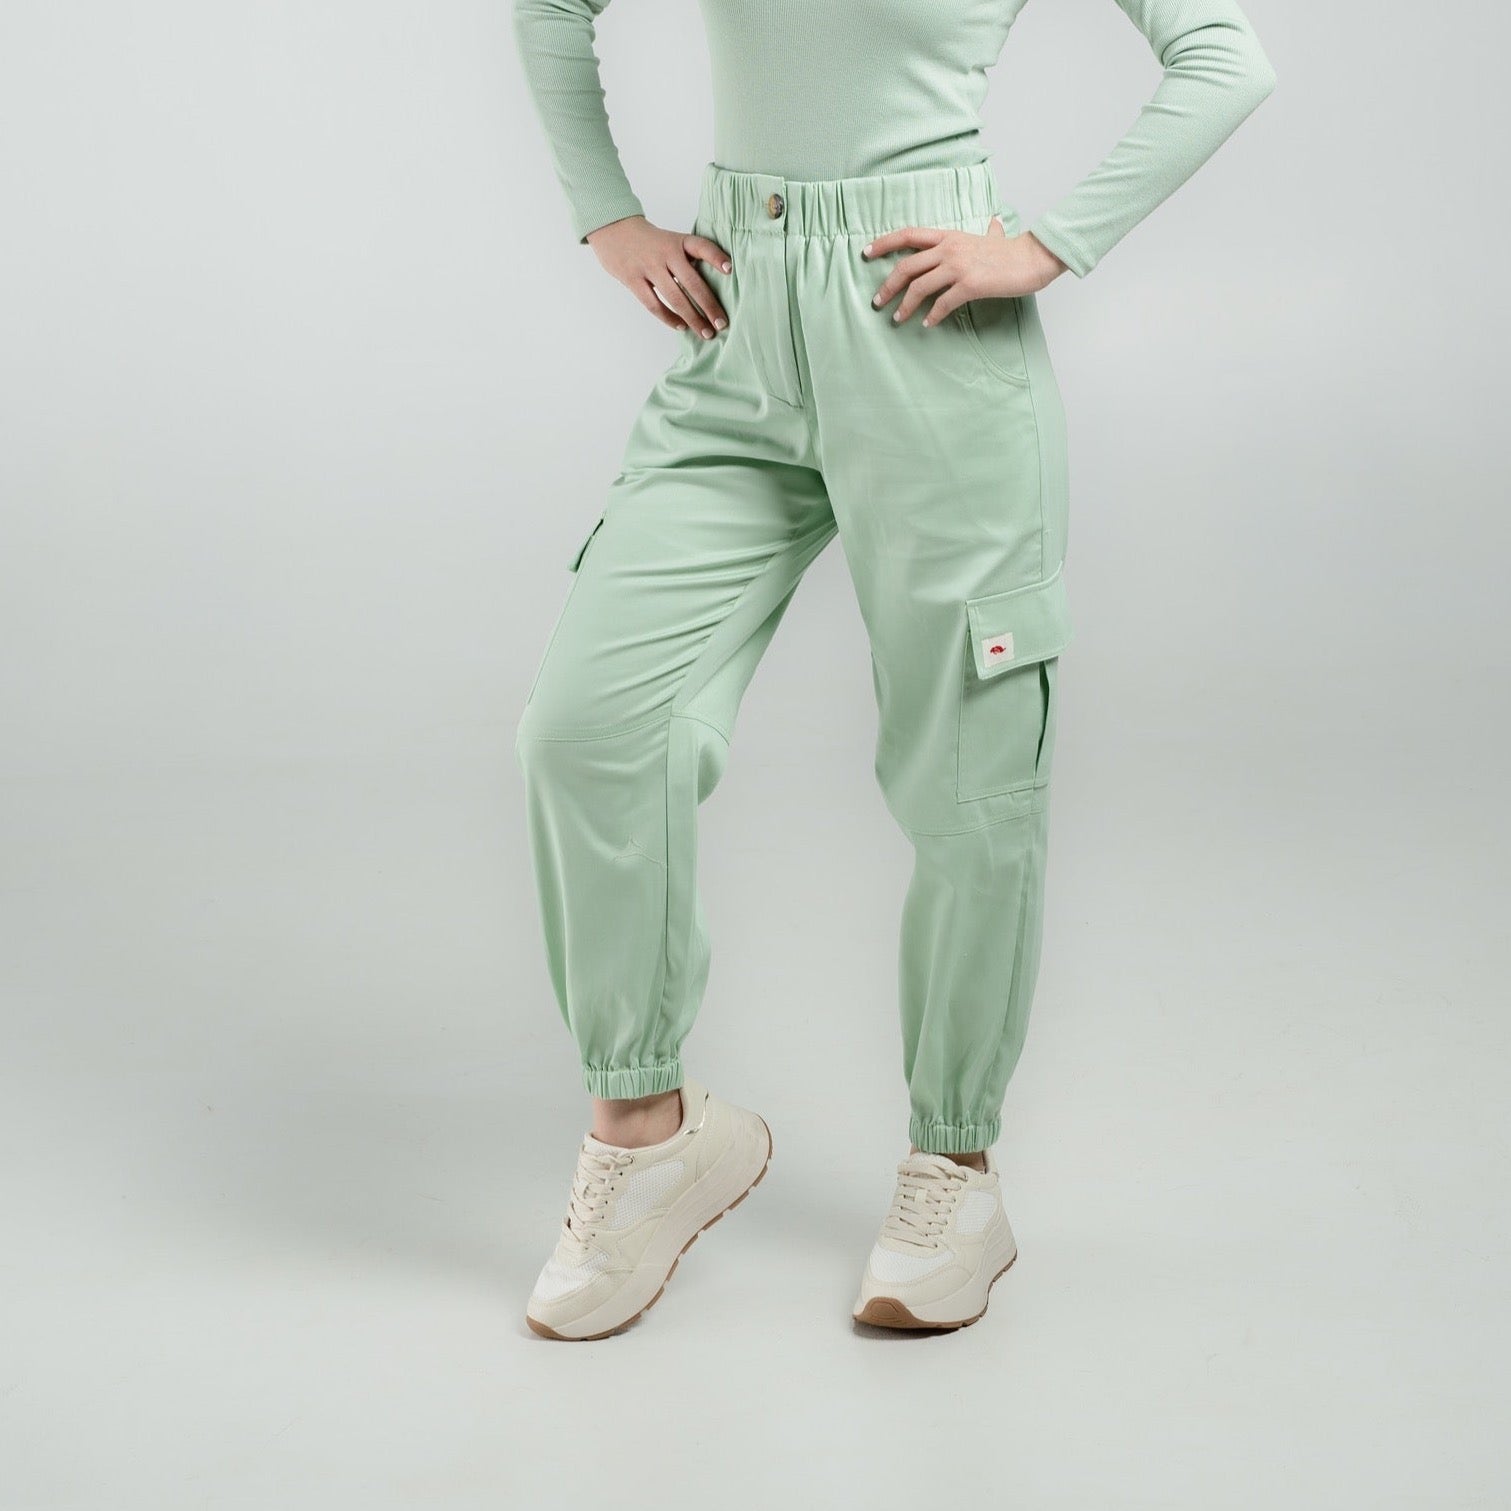 Solid Flap Pocket Cargo Pants  Cargo pants outfit, Green cargo pants  outfit, Mint green pants